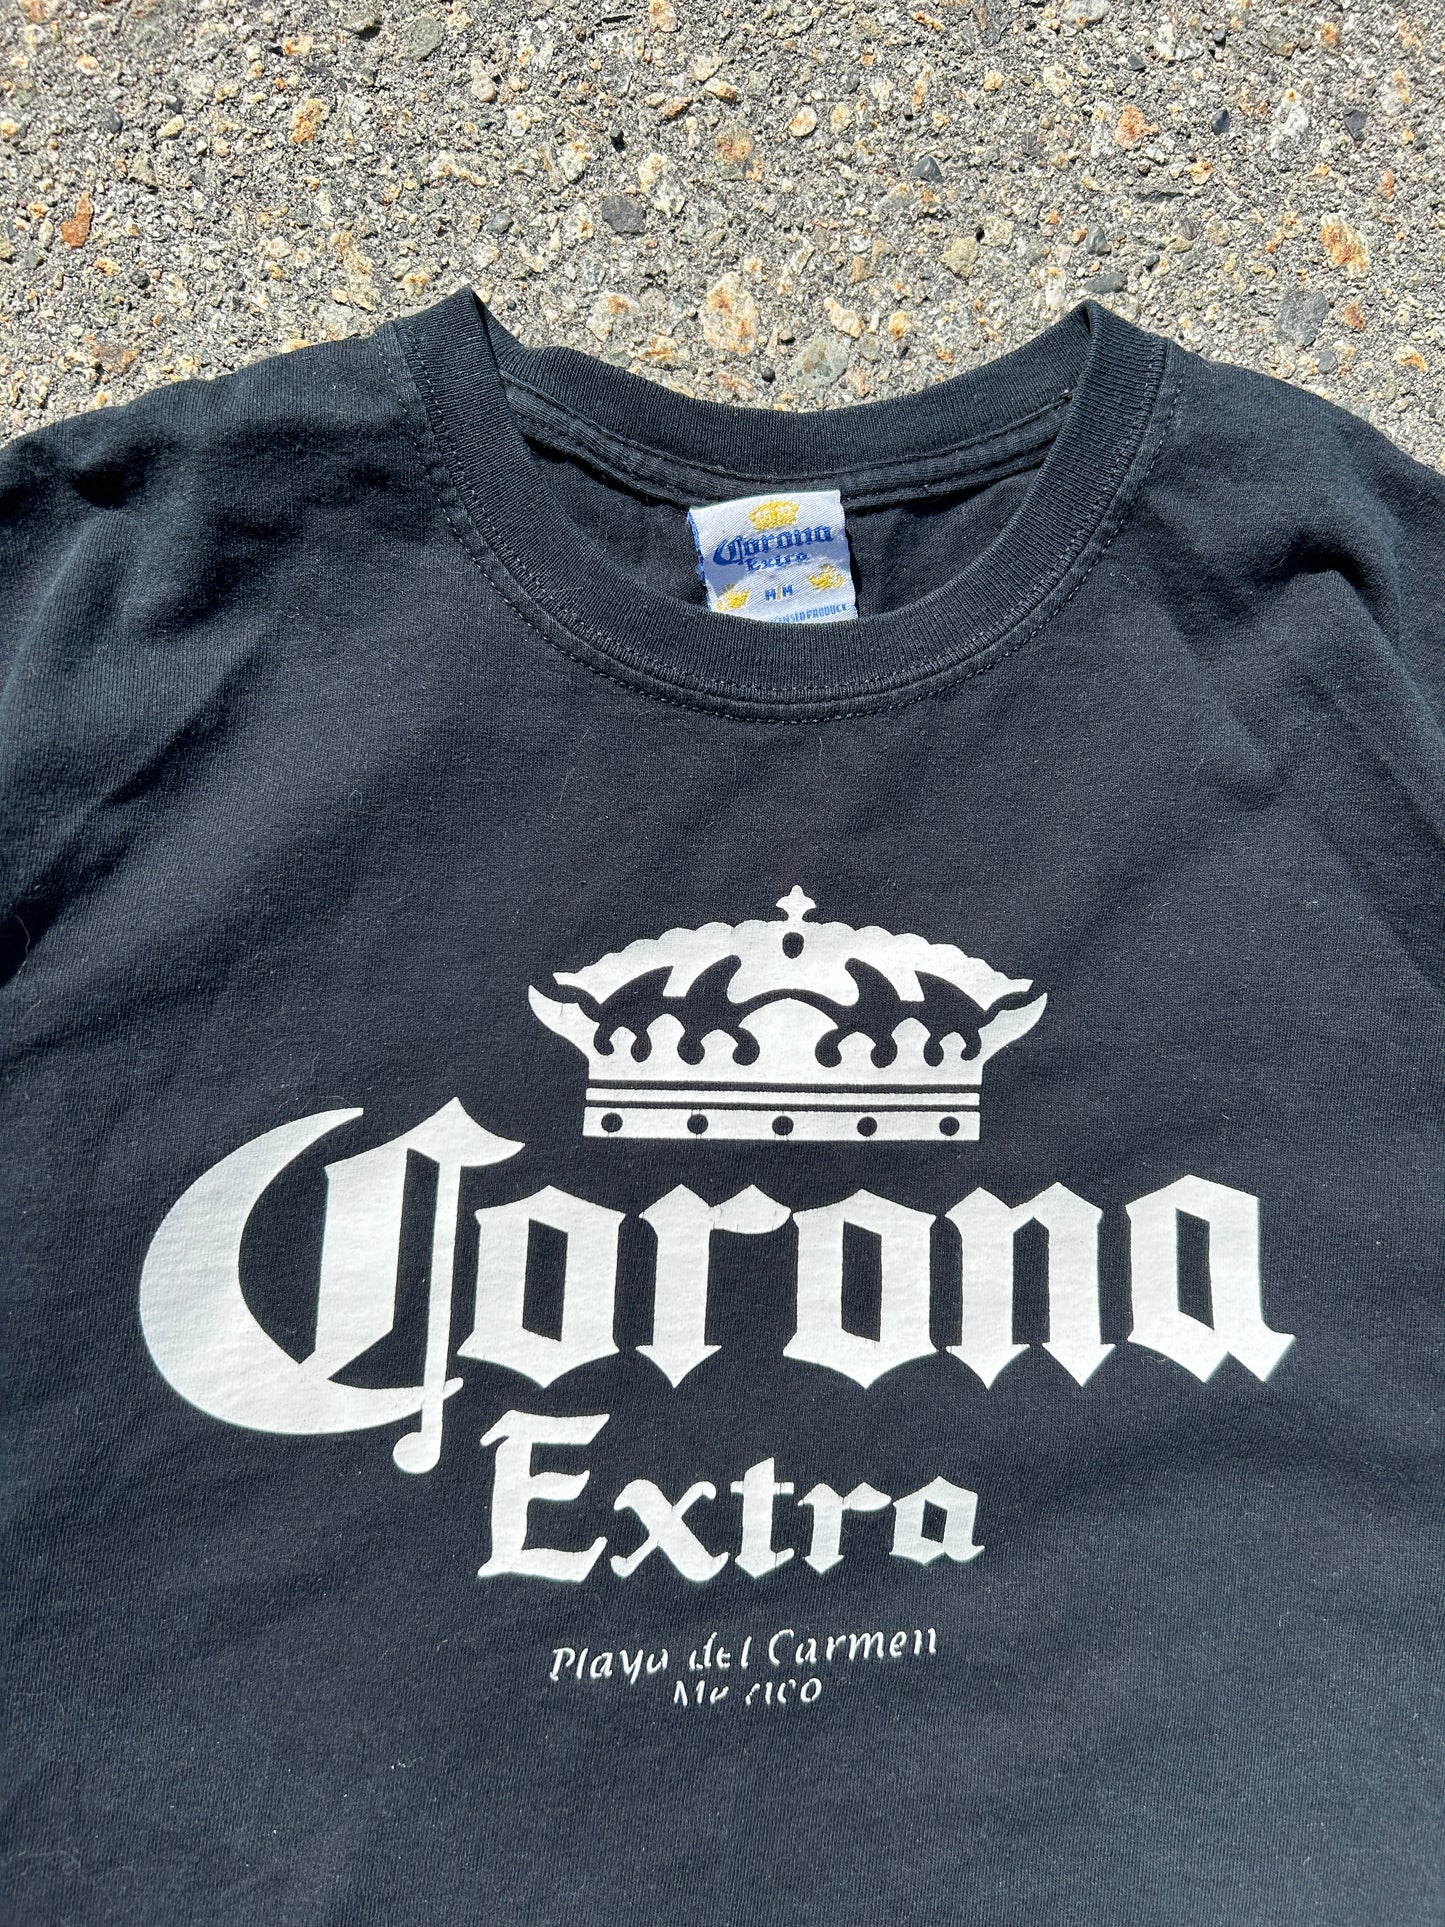 Vintage Corona Extra Tee (M)